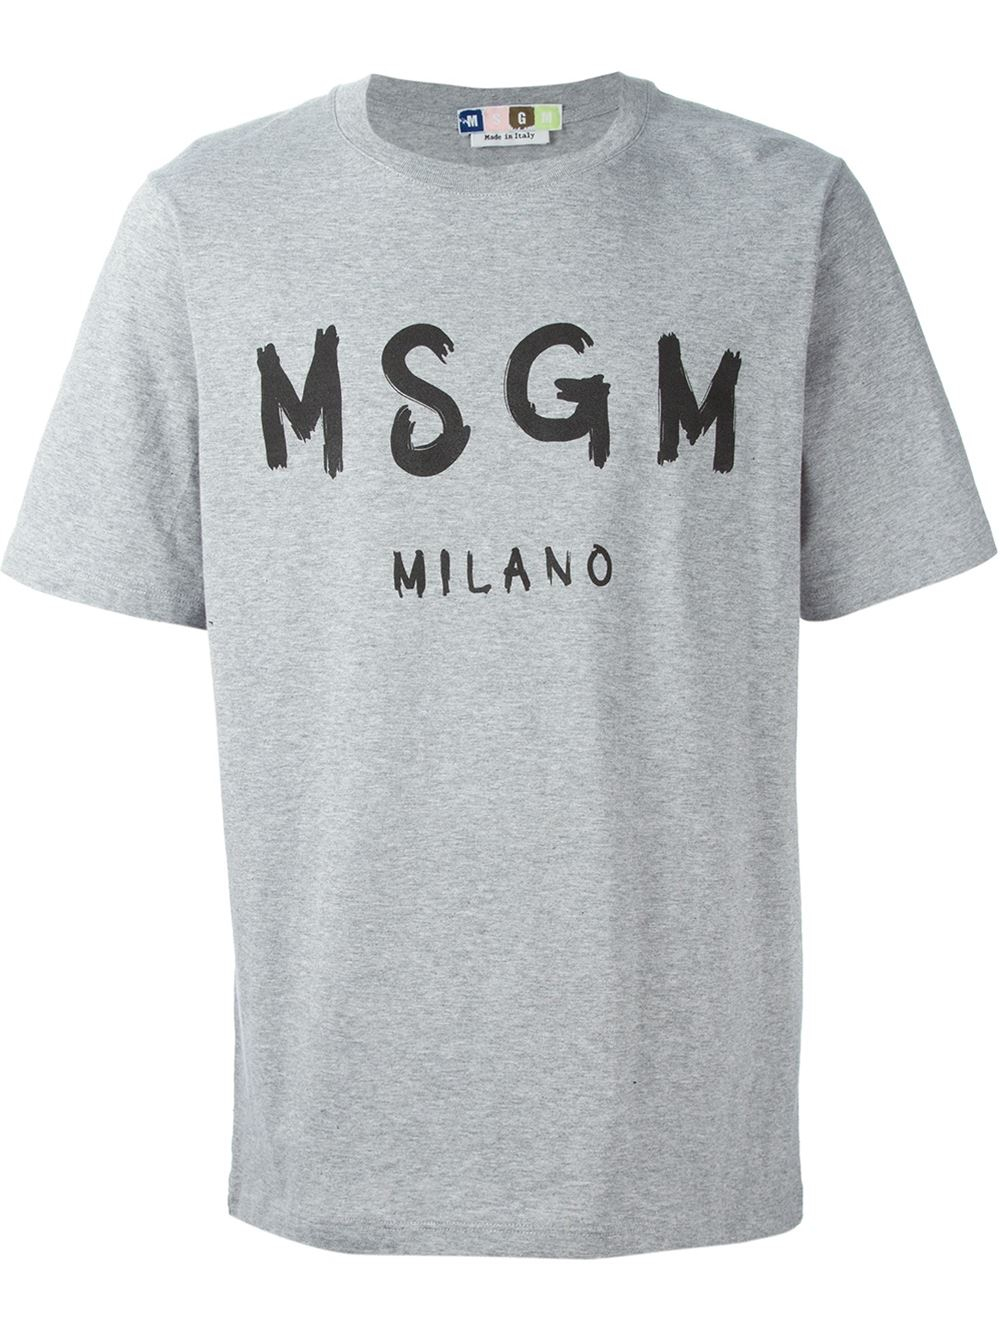 Lyst - Msgm Logo Print T-Shirt in Gray for Men